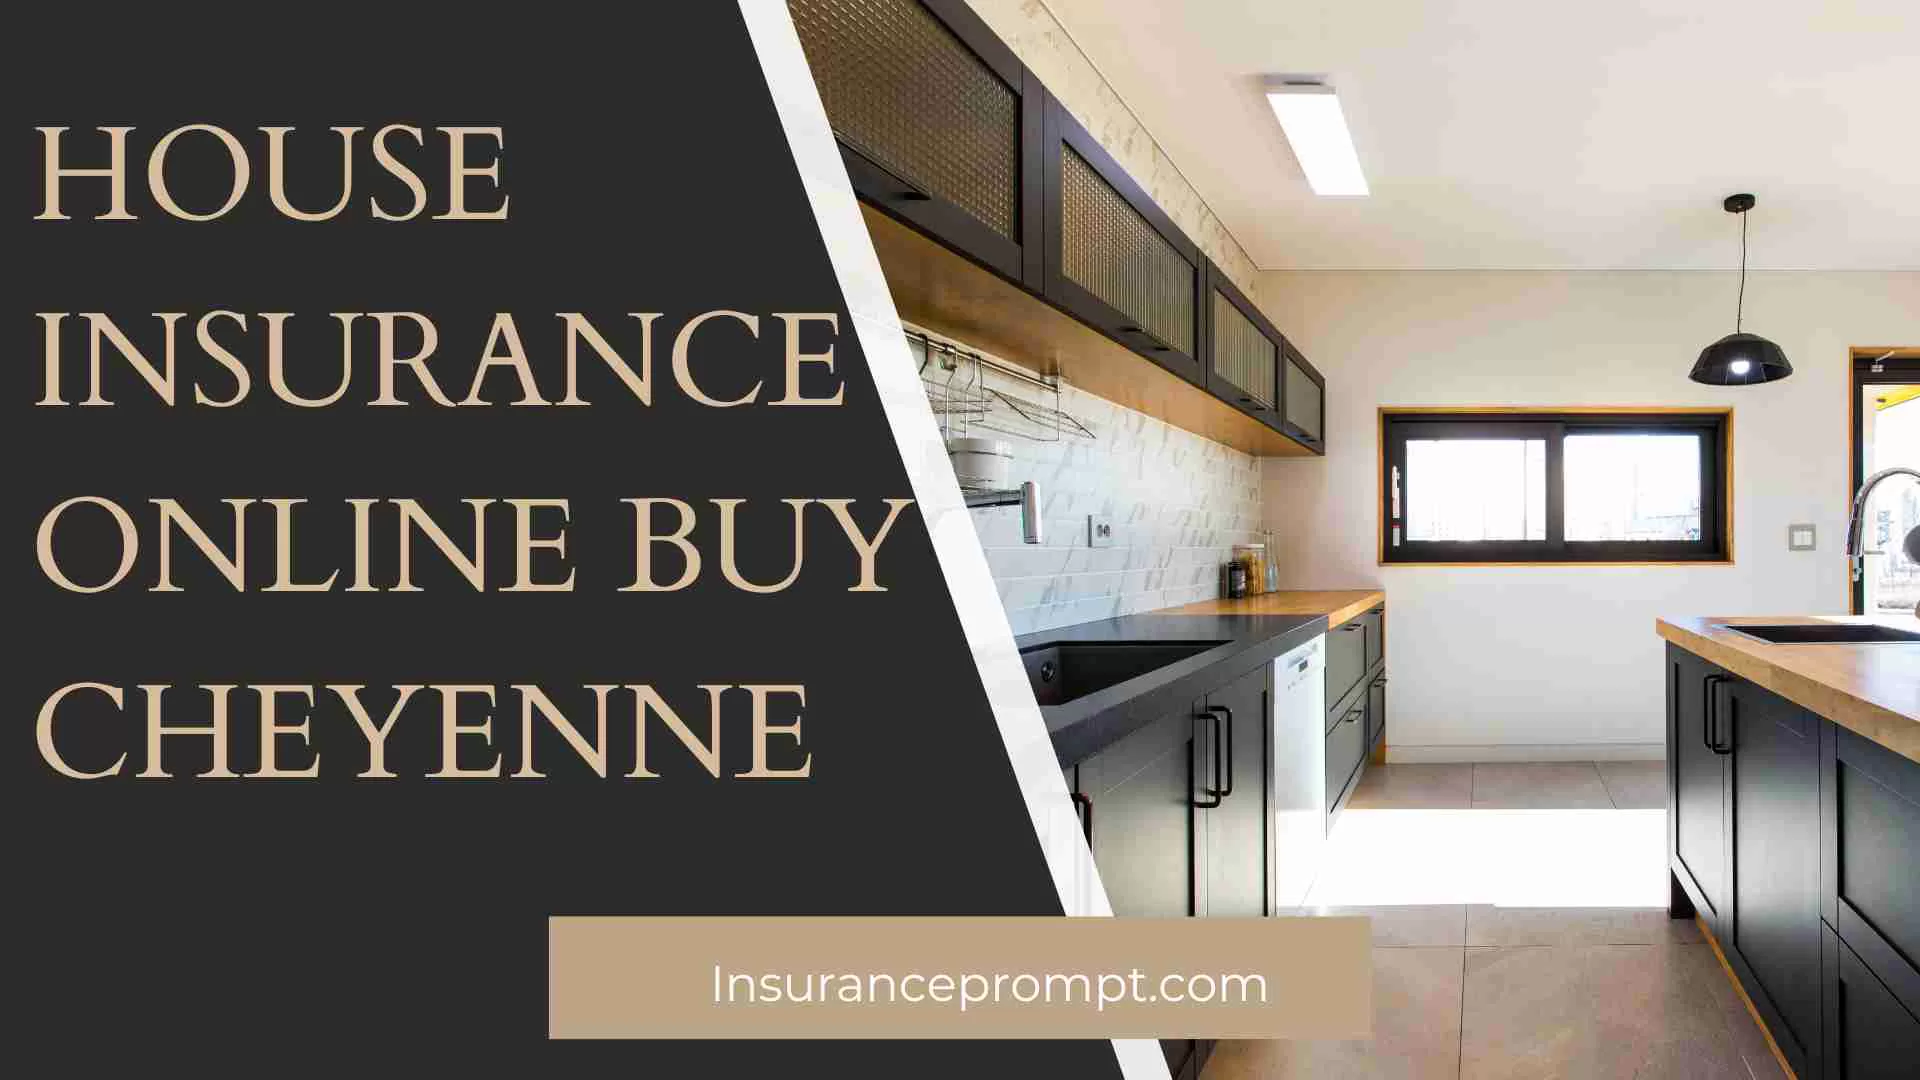 House Insurance Online Buy Cheyenne